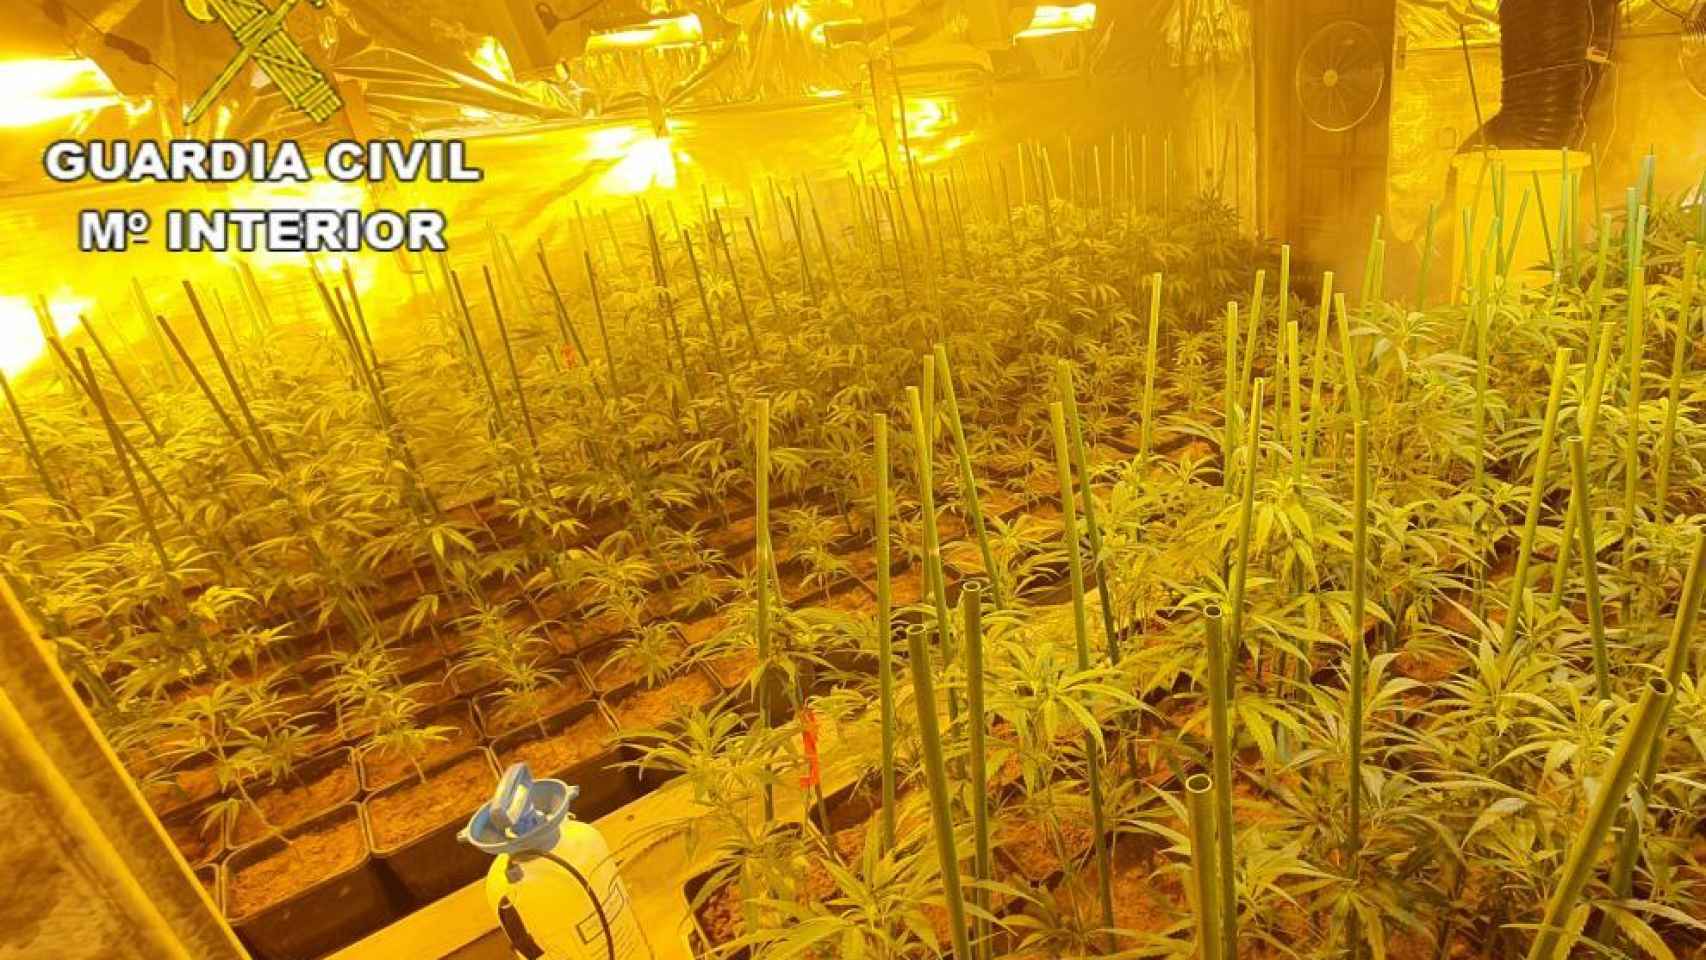 Plantación de marihuana.